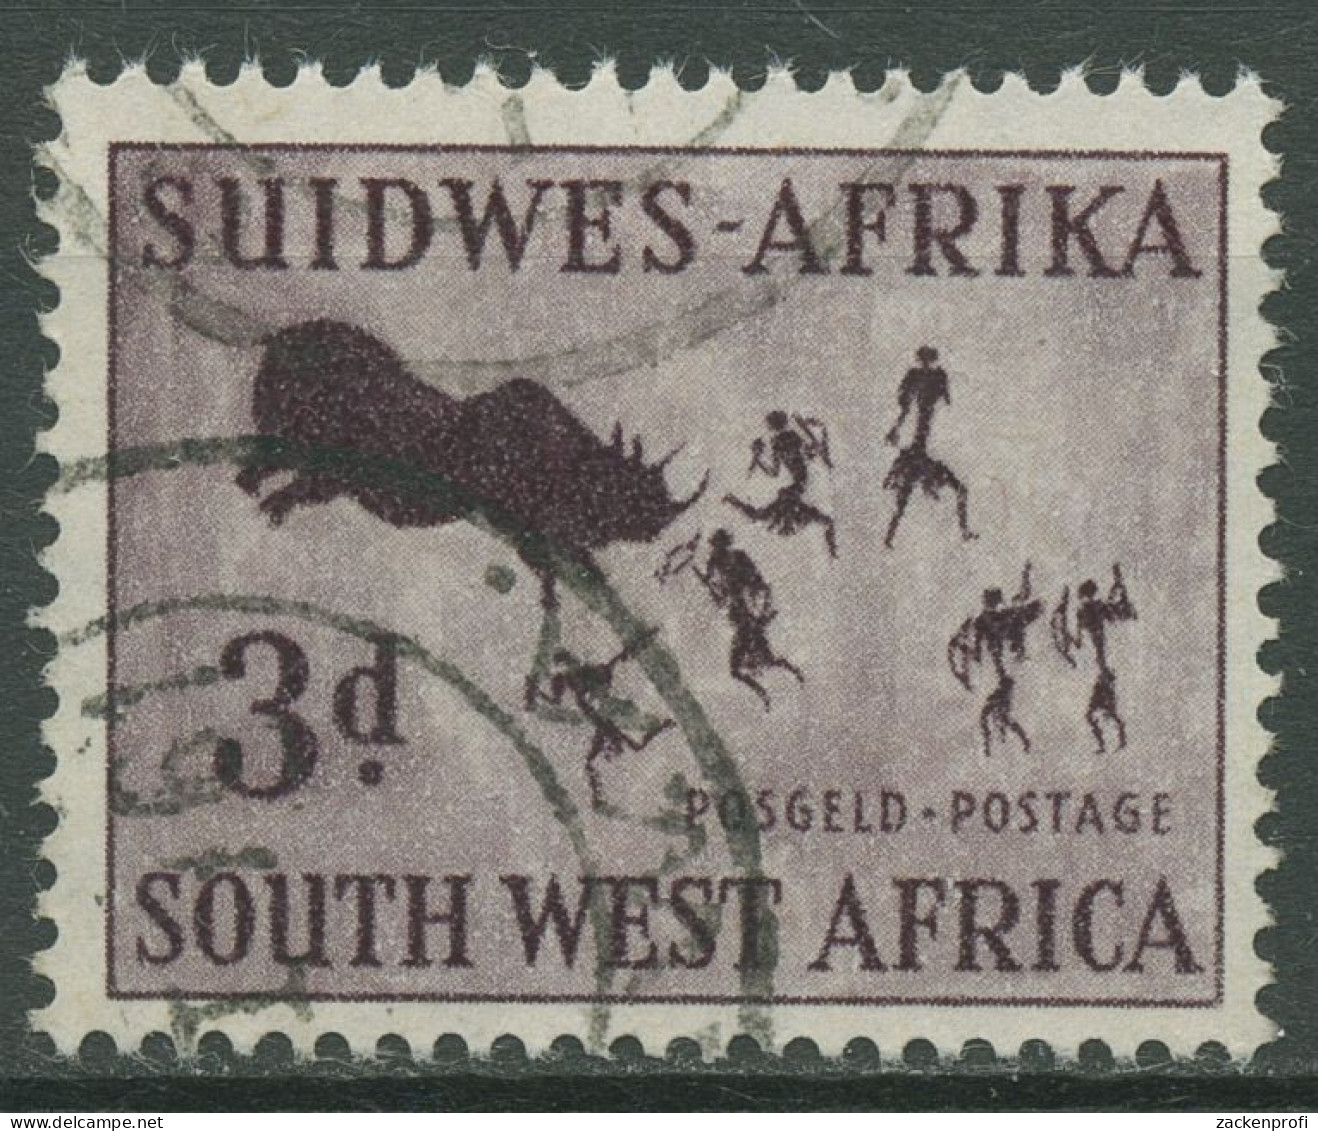 Südwestafrika 1960 Felszeichnung Nashornjagd 293 Gestempelt - Africa Del Sud-Ovest (1923-1990)